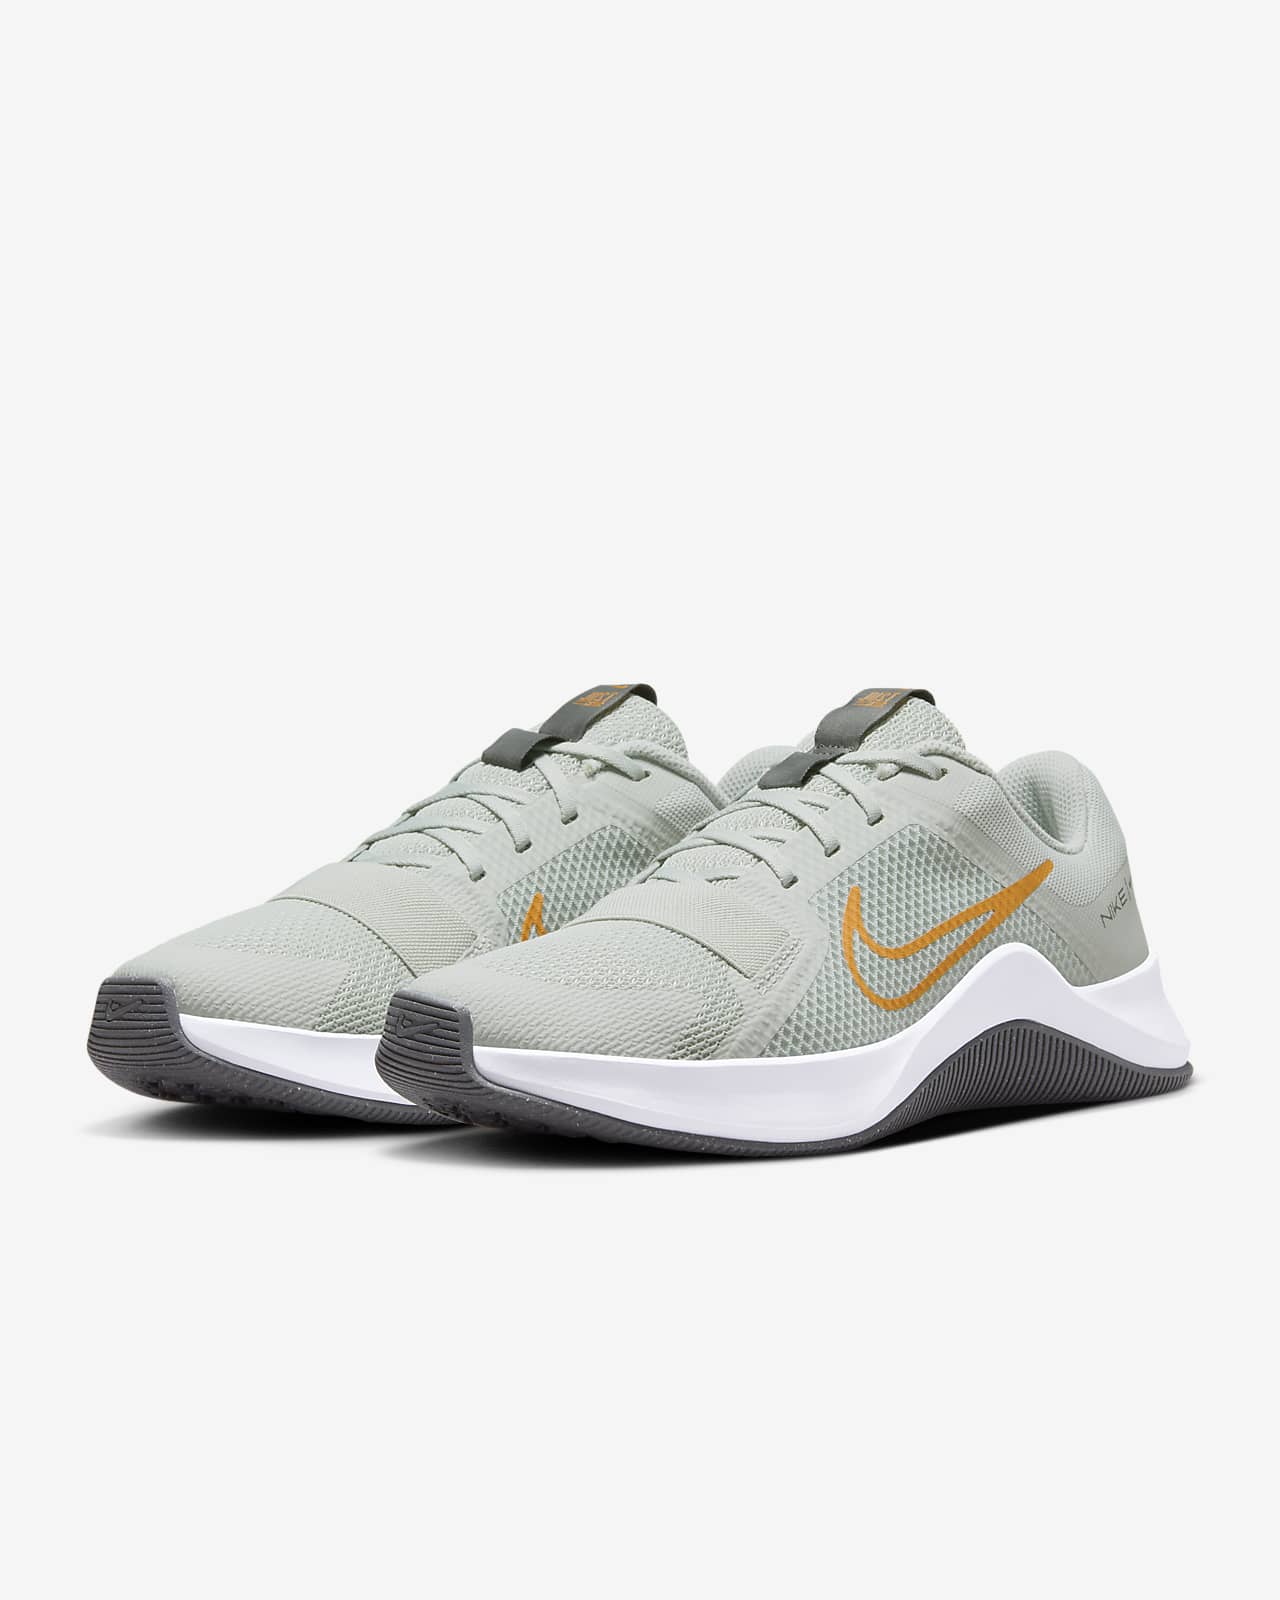 Nike MC Trainer 2 Men’s Training Shoes, Men's, Size: 11, Grey